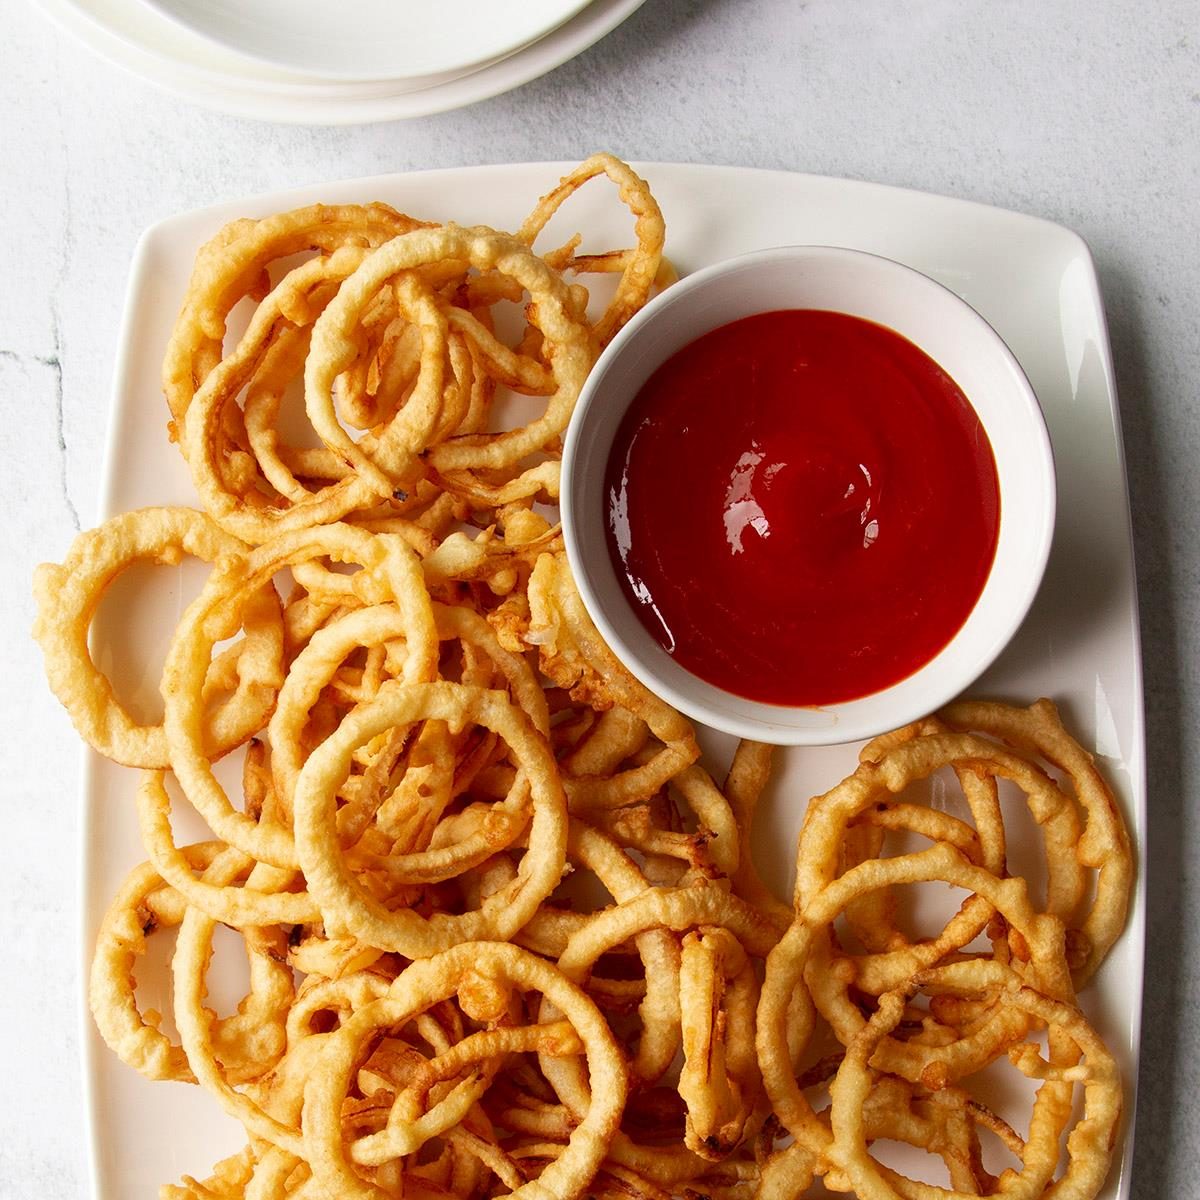 Crispy Fried Onion Rings Recipe: How to Make It